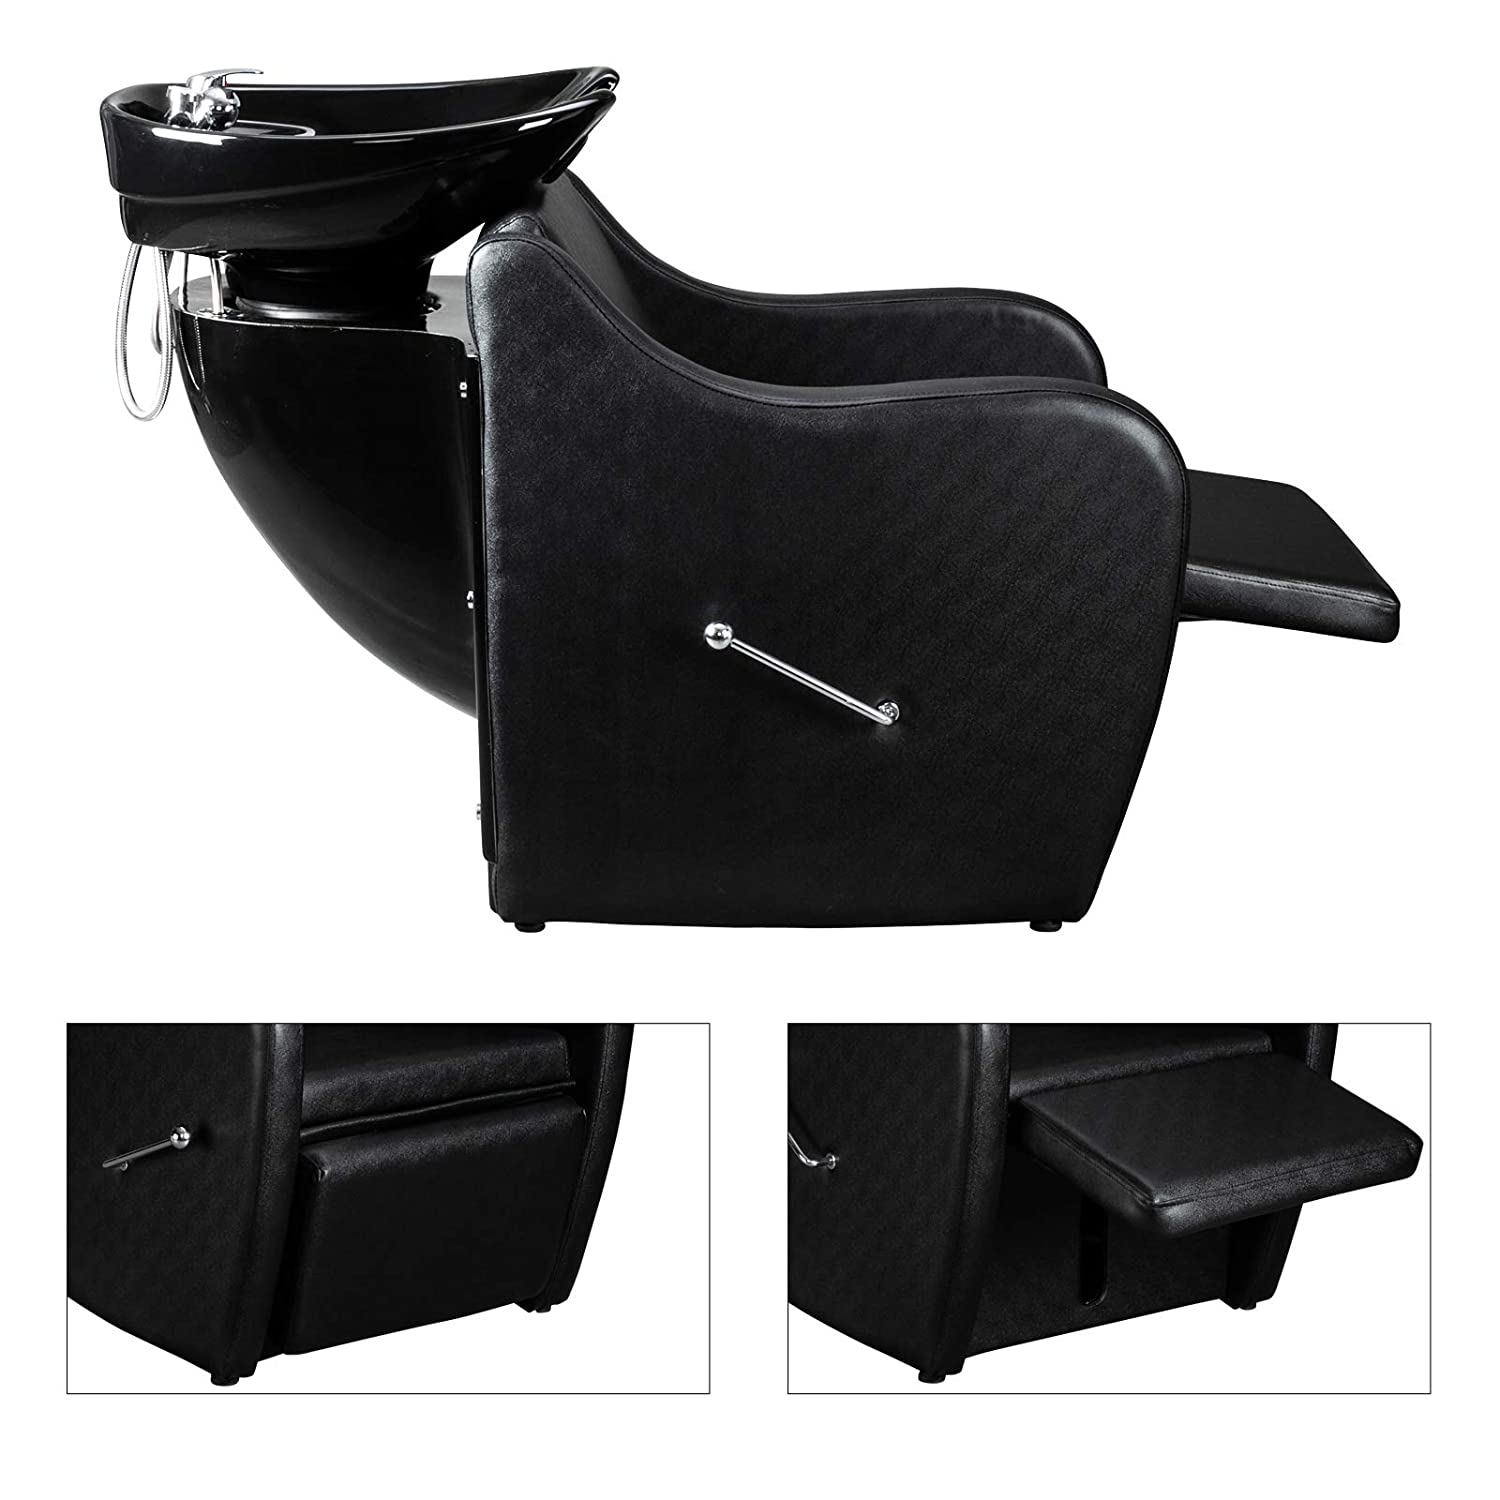 OmySalon Barber Backwash Chair ABS Plastic Shampoo Bowl Sink Unit Station Spa Salon Equipment